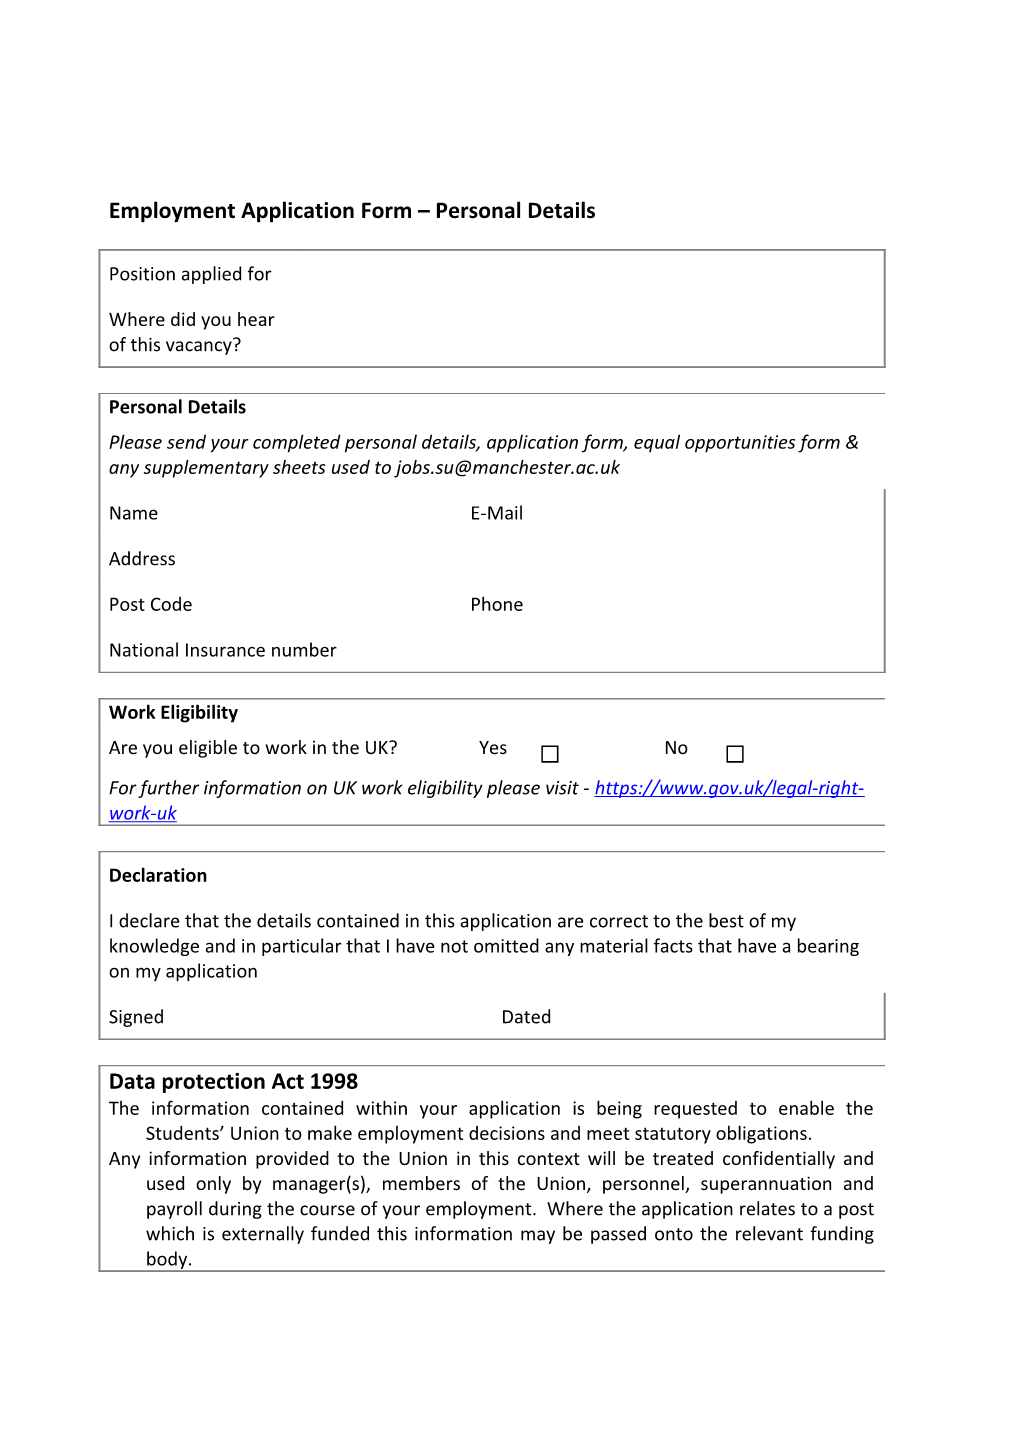 Employment Application Form Personal Details